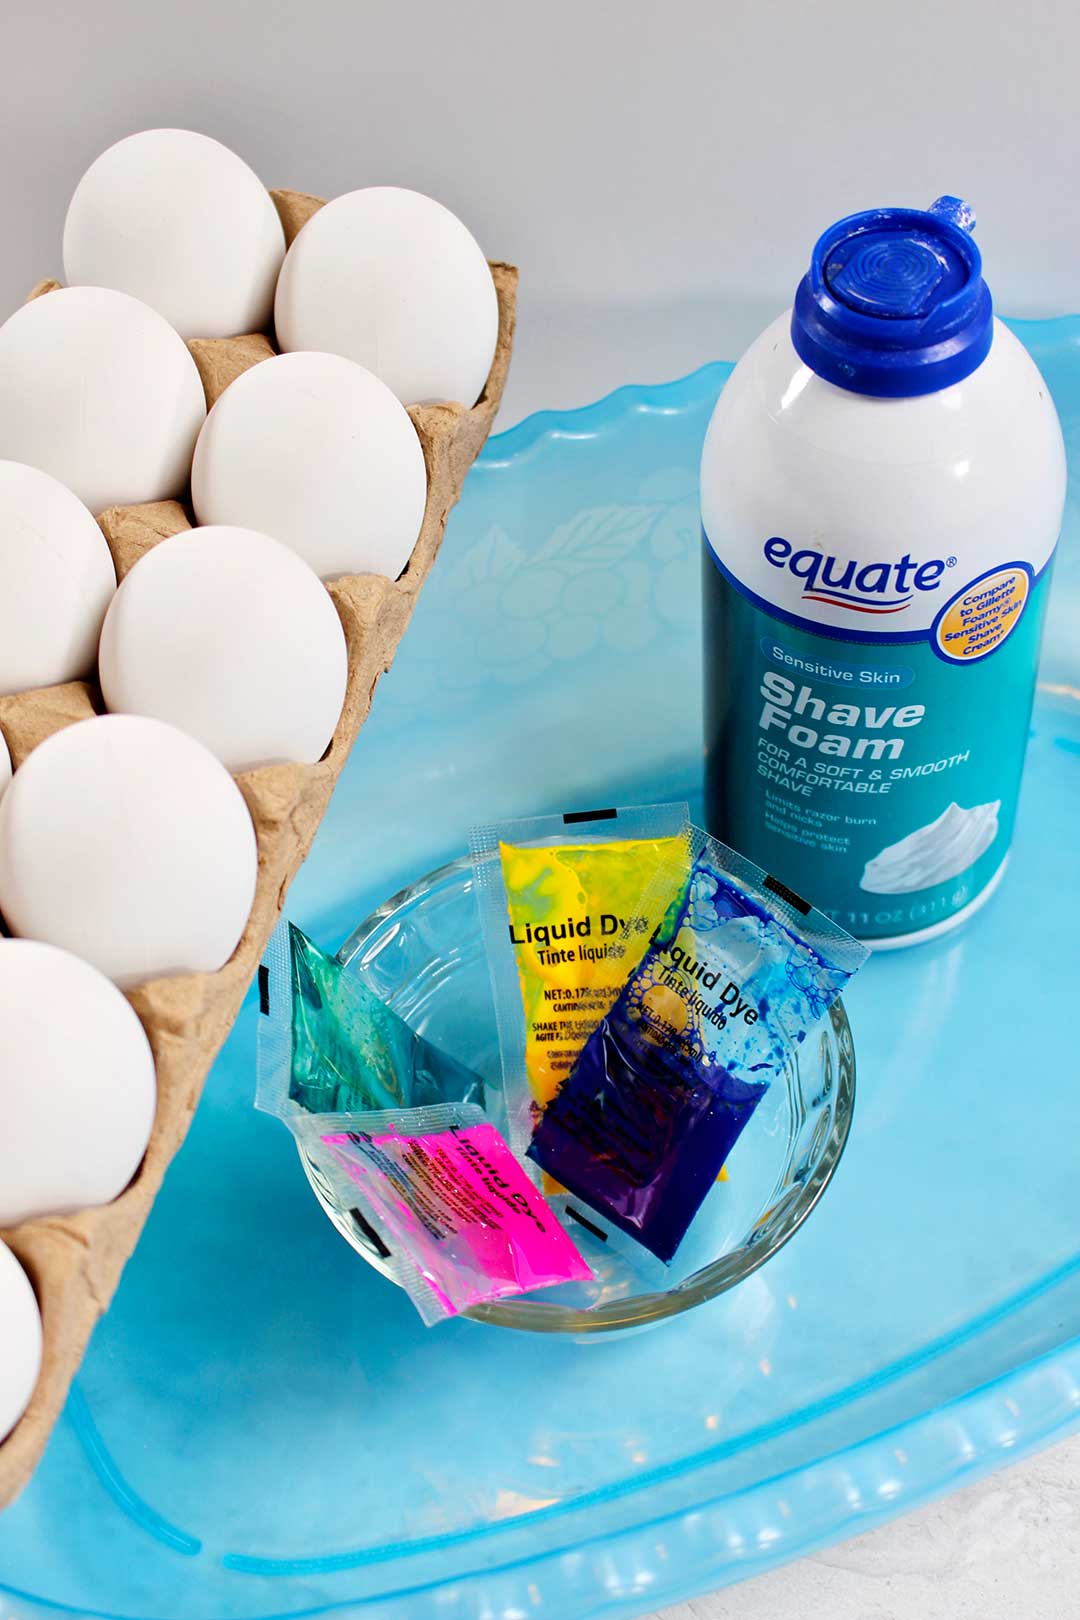 Liquid dye, shaving foam, a blue plastic tub, and a dozen eggs.